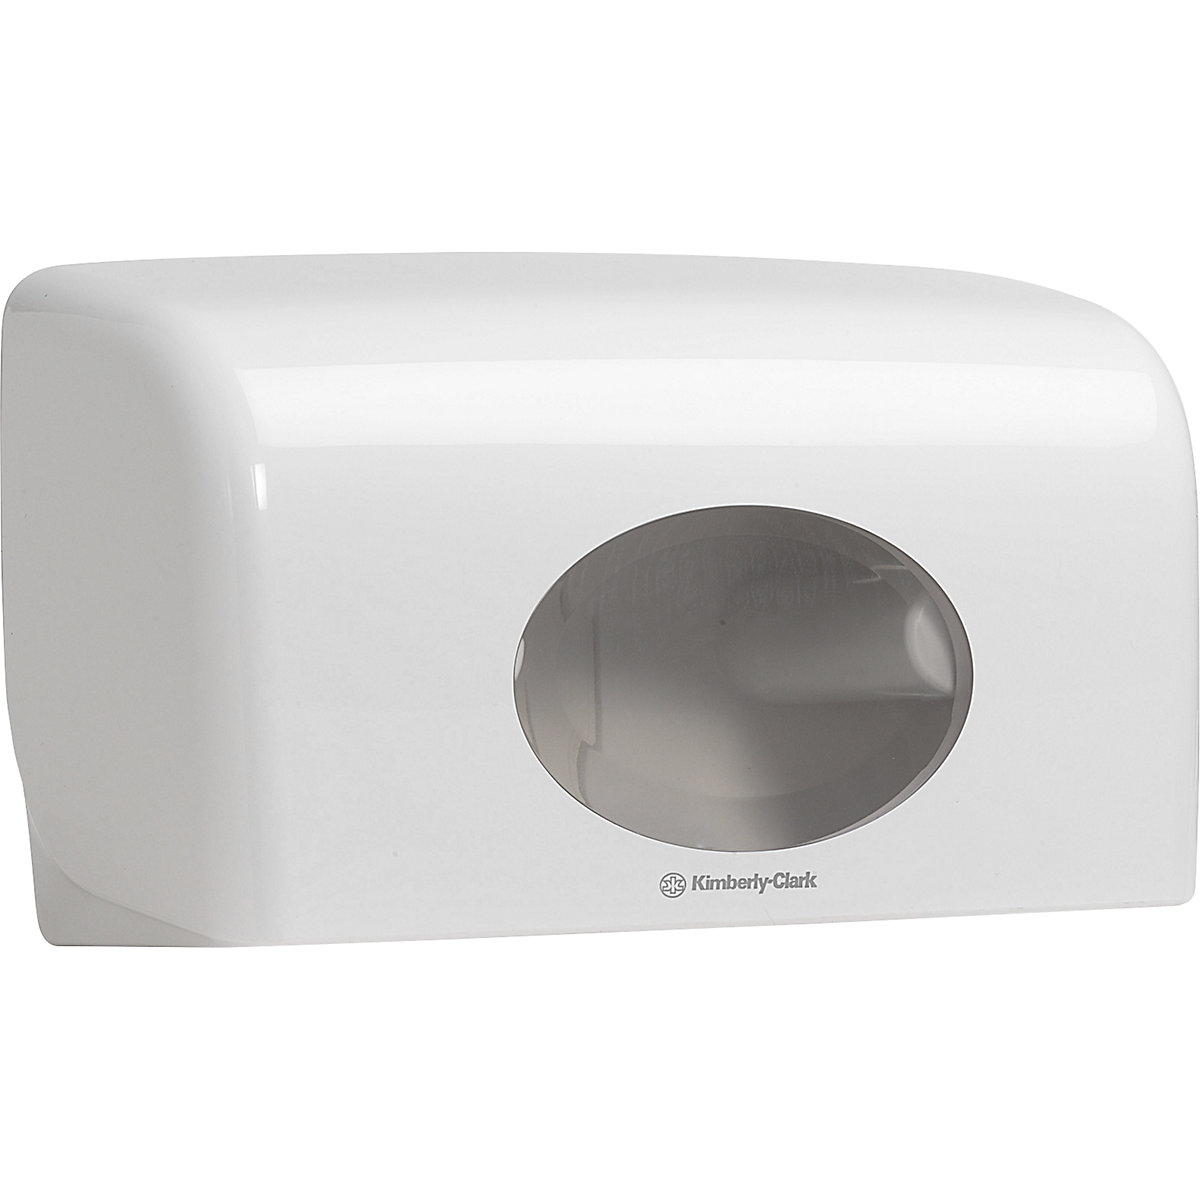 Aquarius™ 6992 toilet paper dispenser - Kimberly-Clark